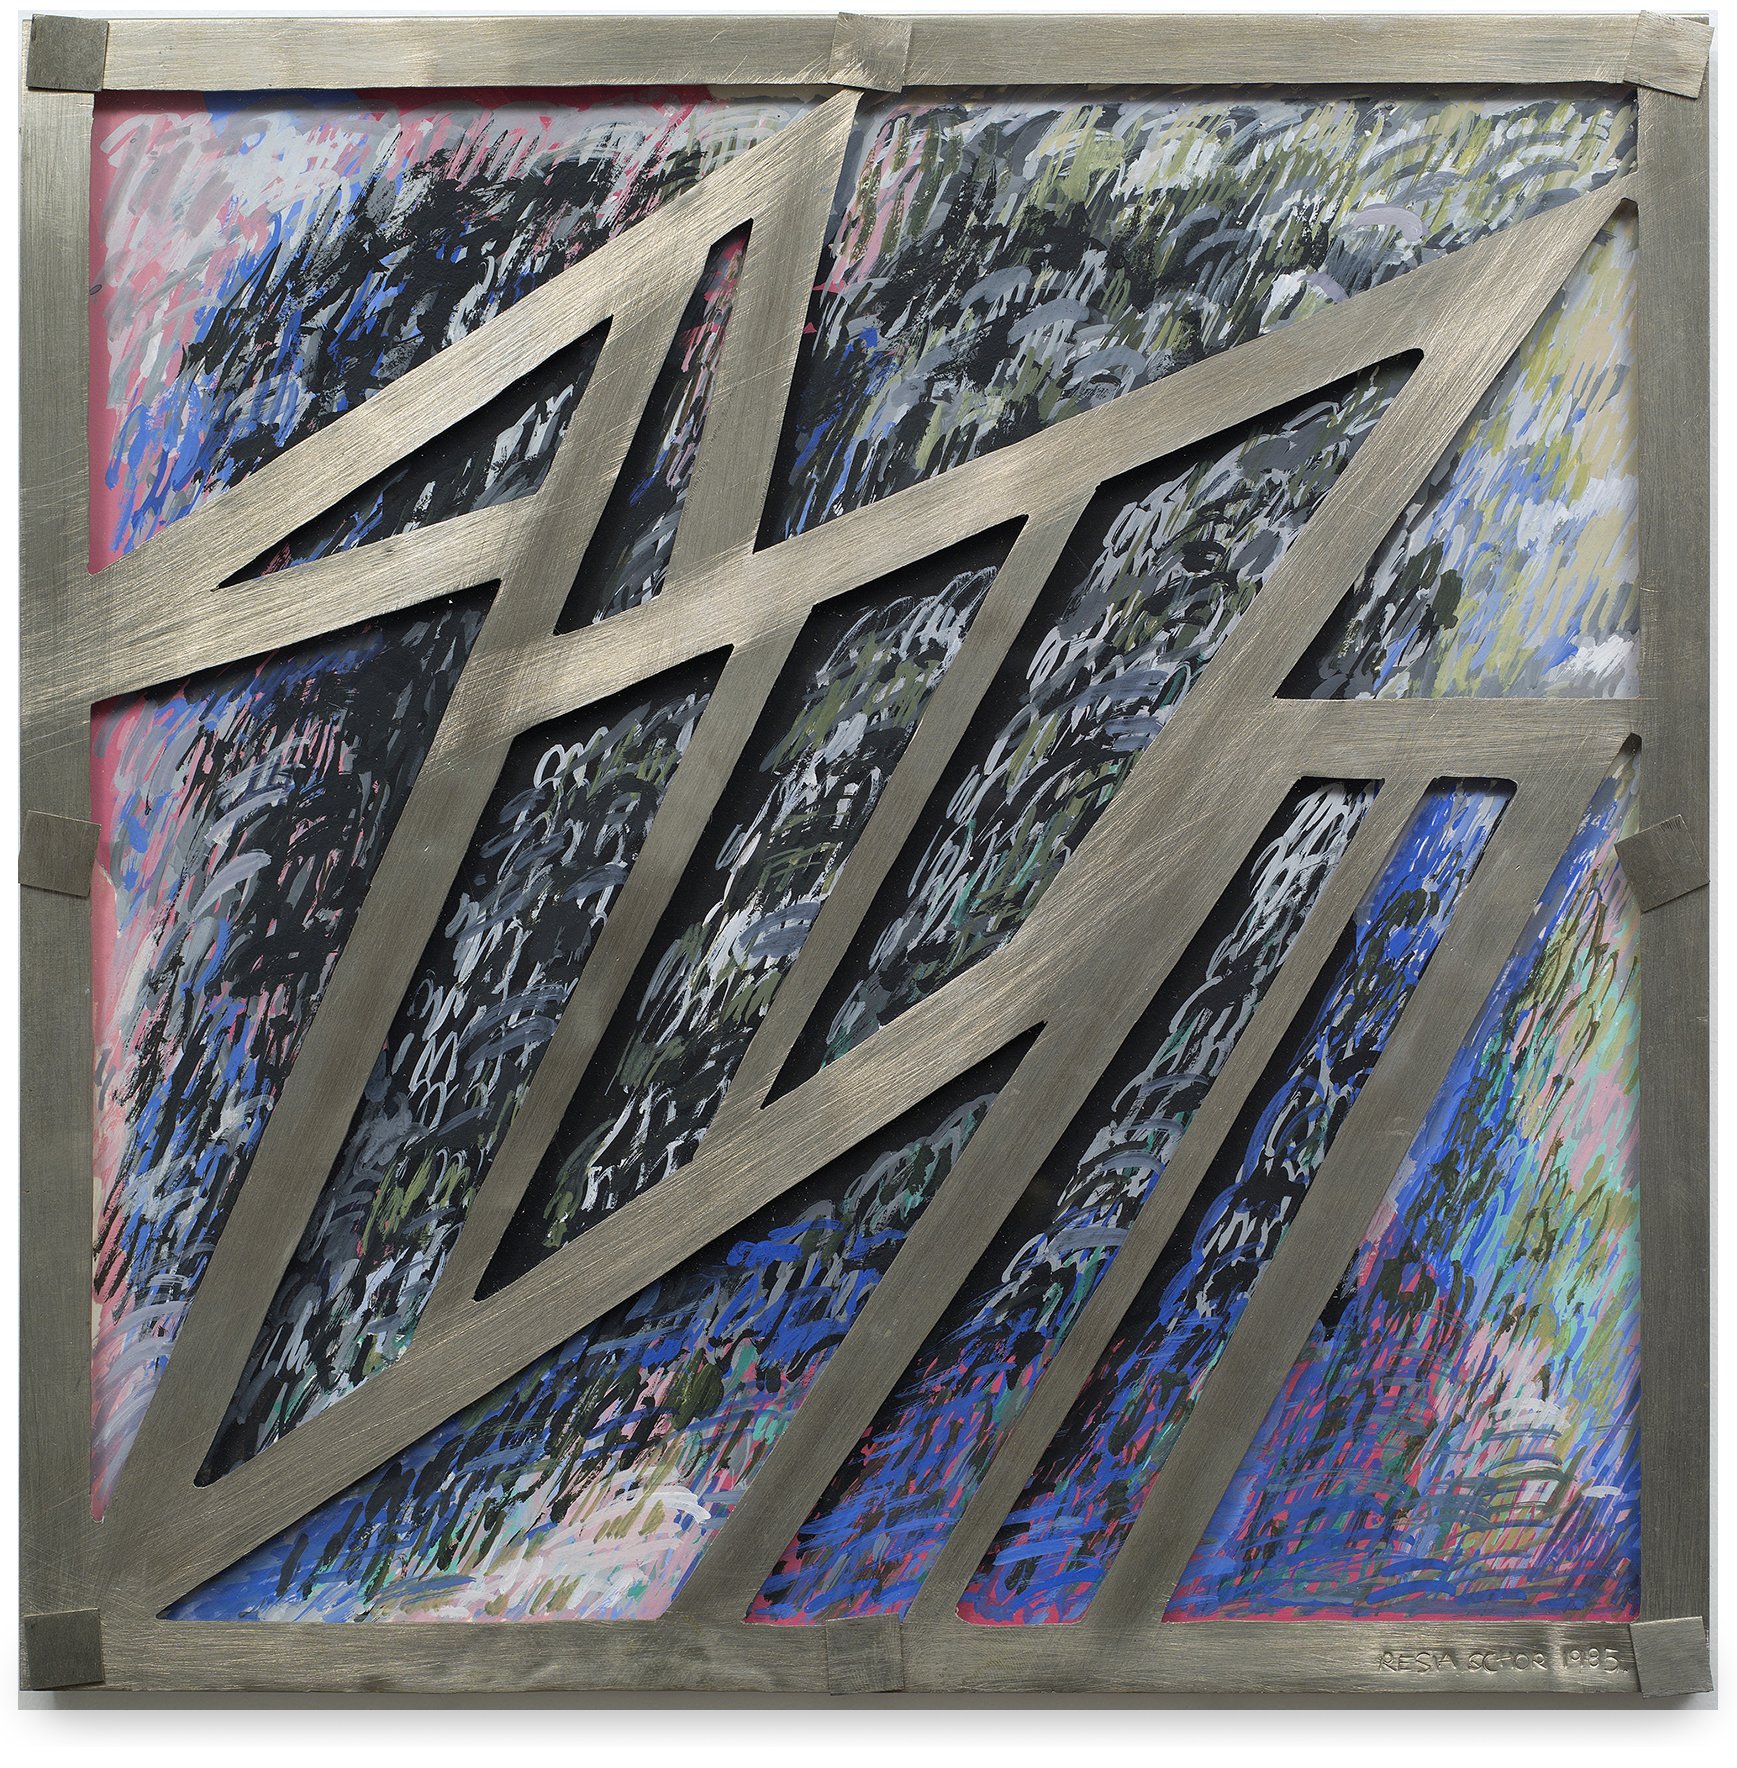  Storm on the Cape, 1985, gouache on paper, white metal, Plexiglas, 12 x 12 in 